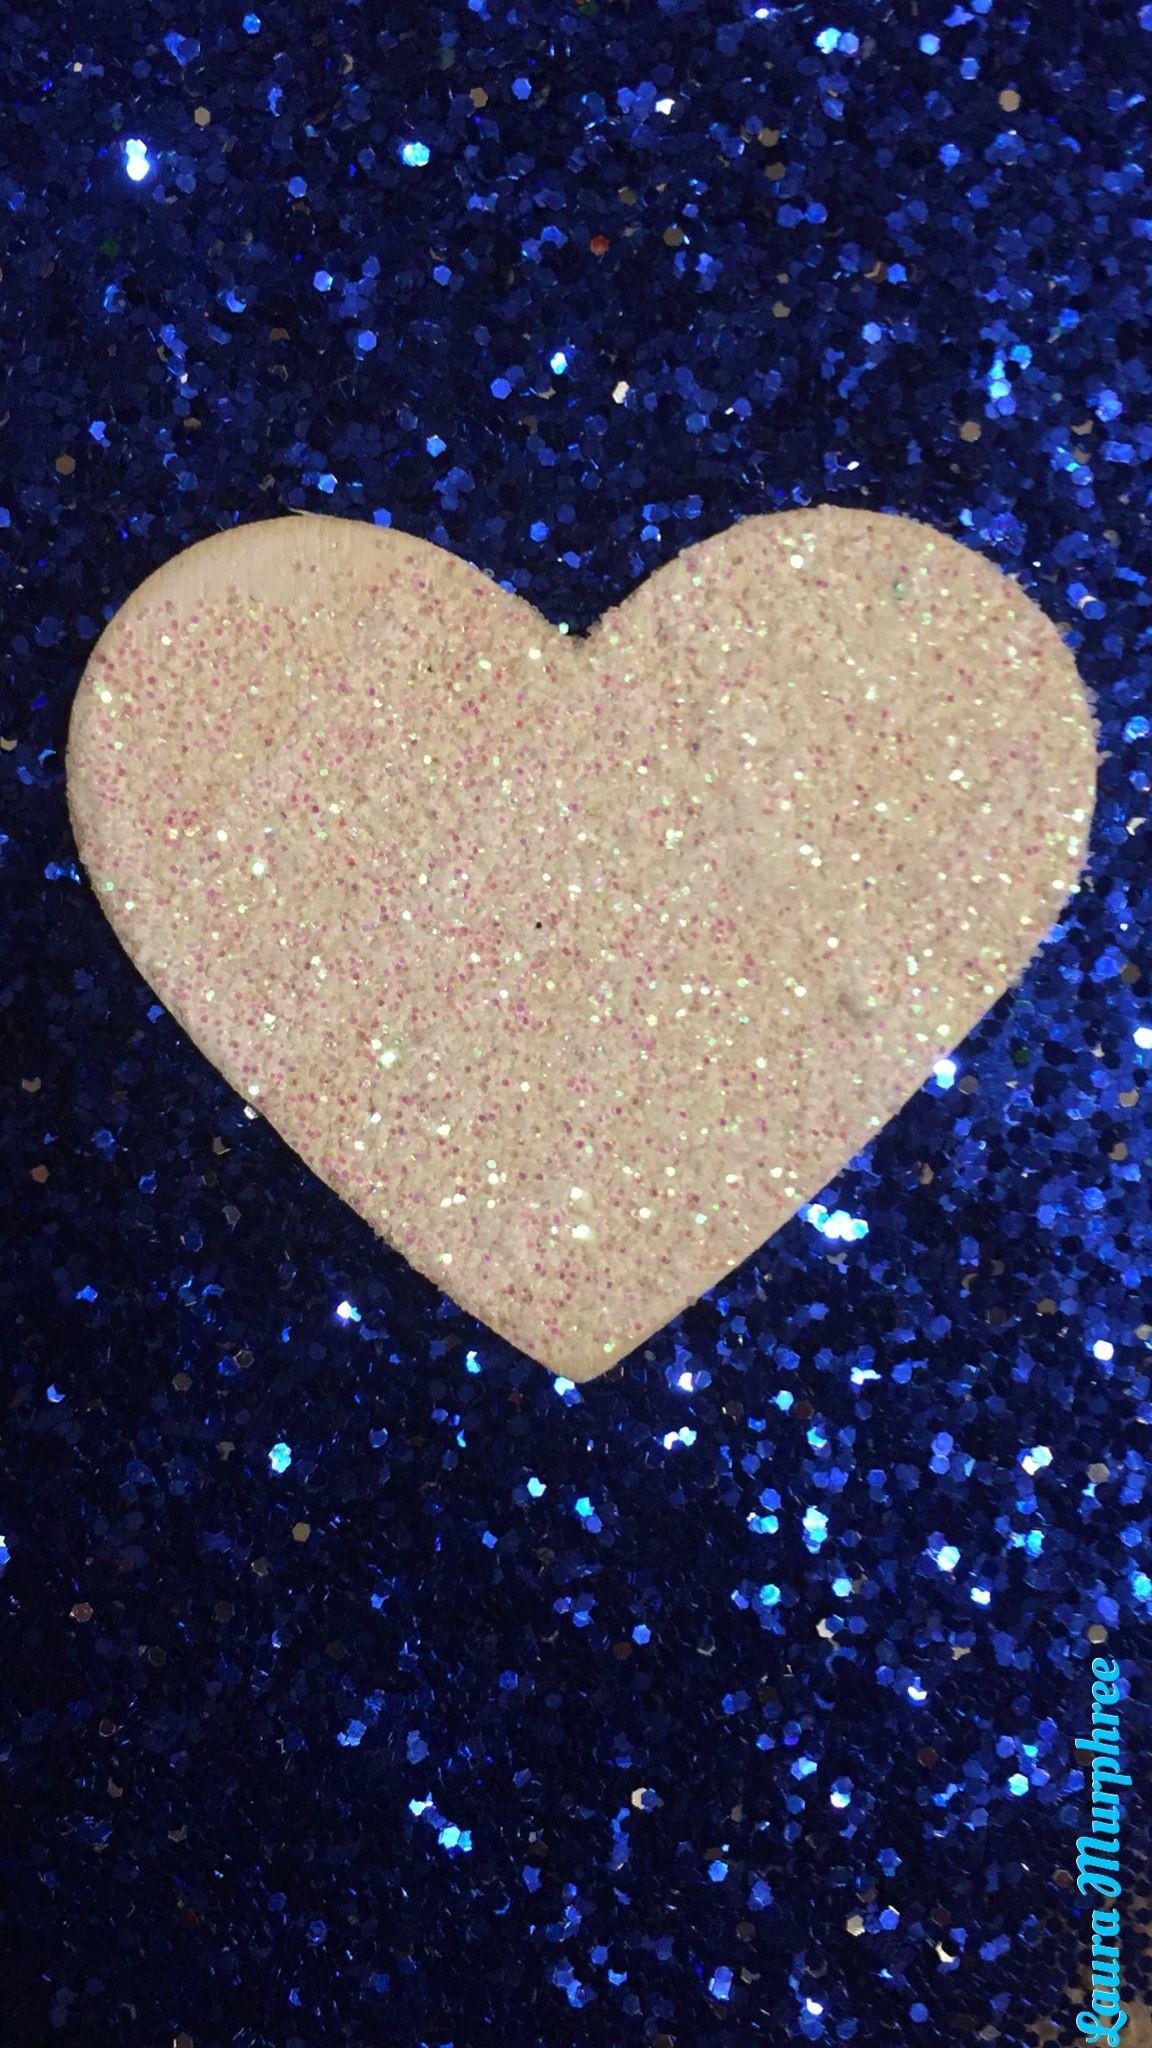 Cute Heart Wallpaper for iPhone